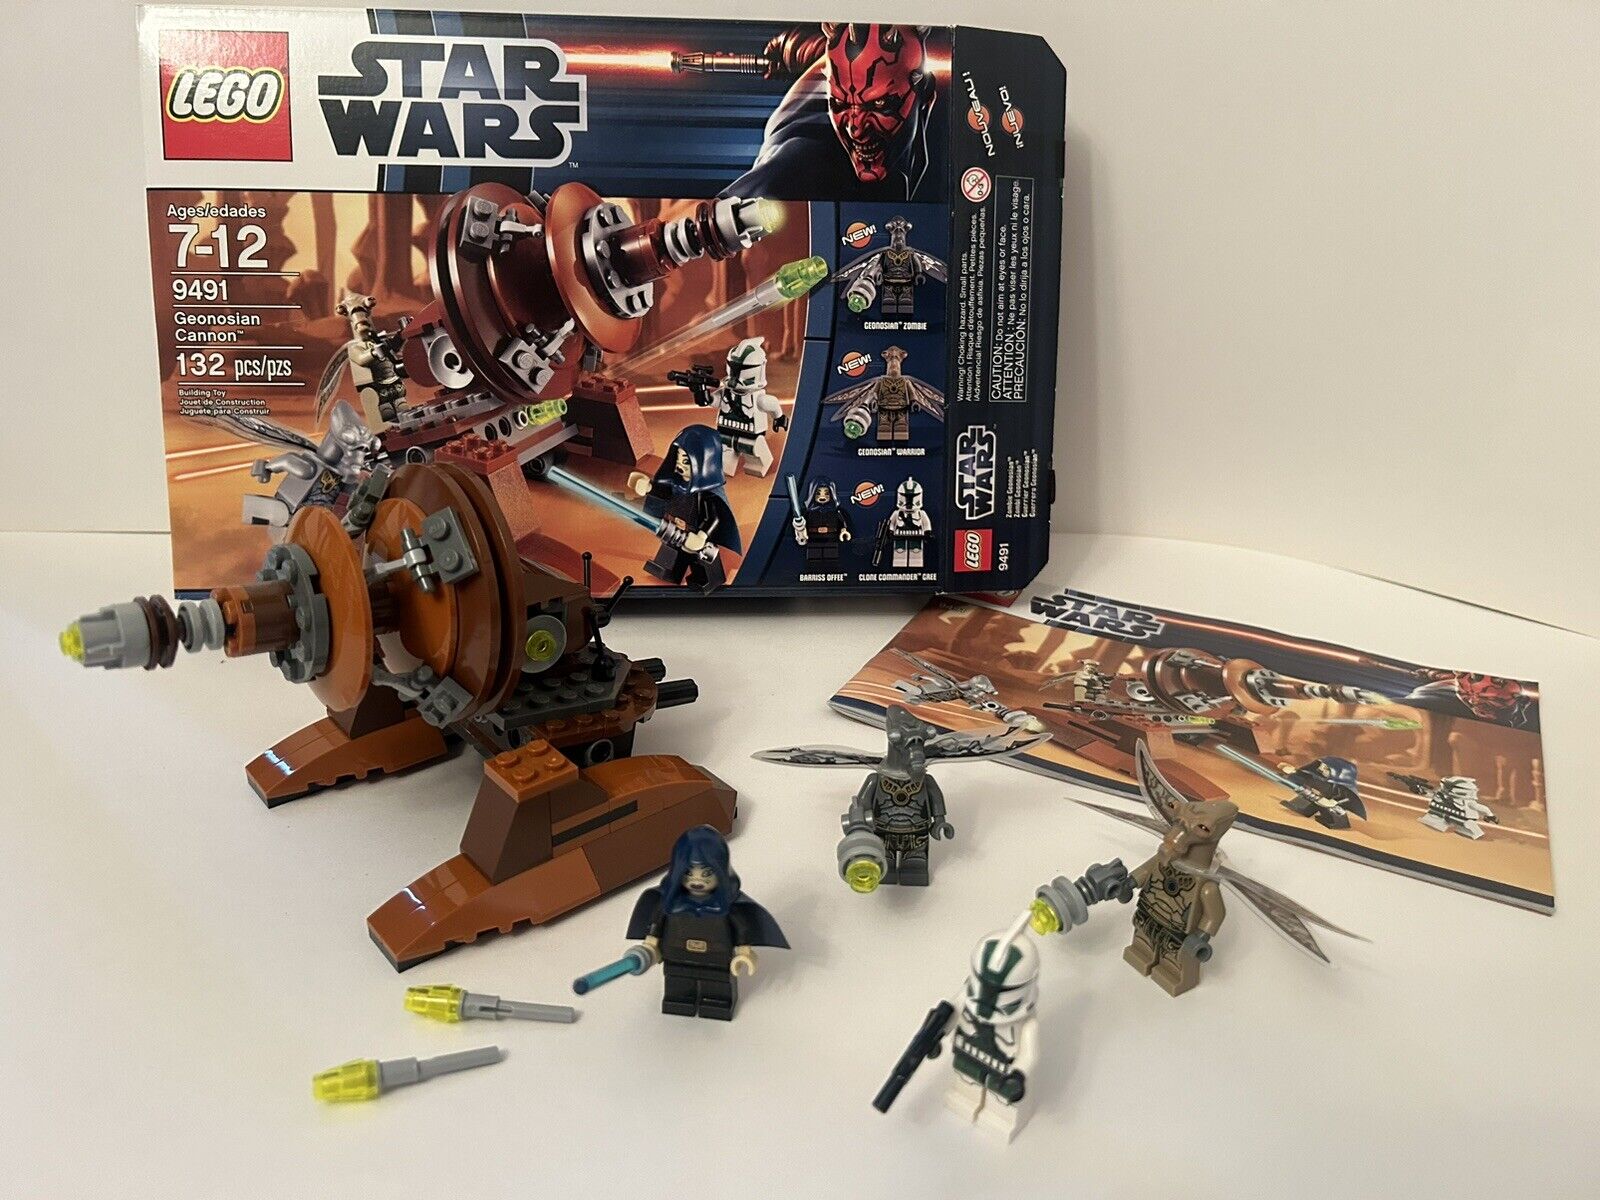 LEGO Star Wars: Geonosian Cannon (9491) 100% Complete Minifigs Instructions Box